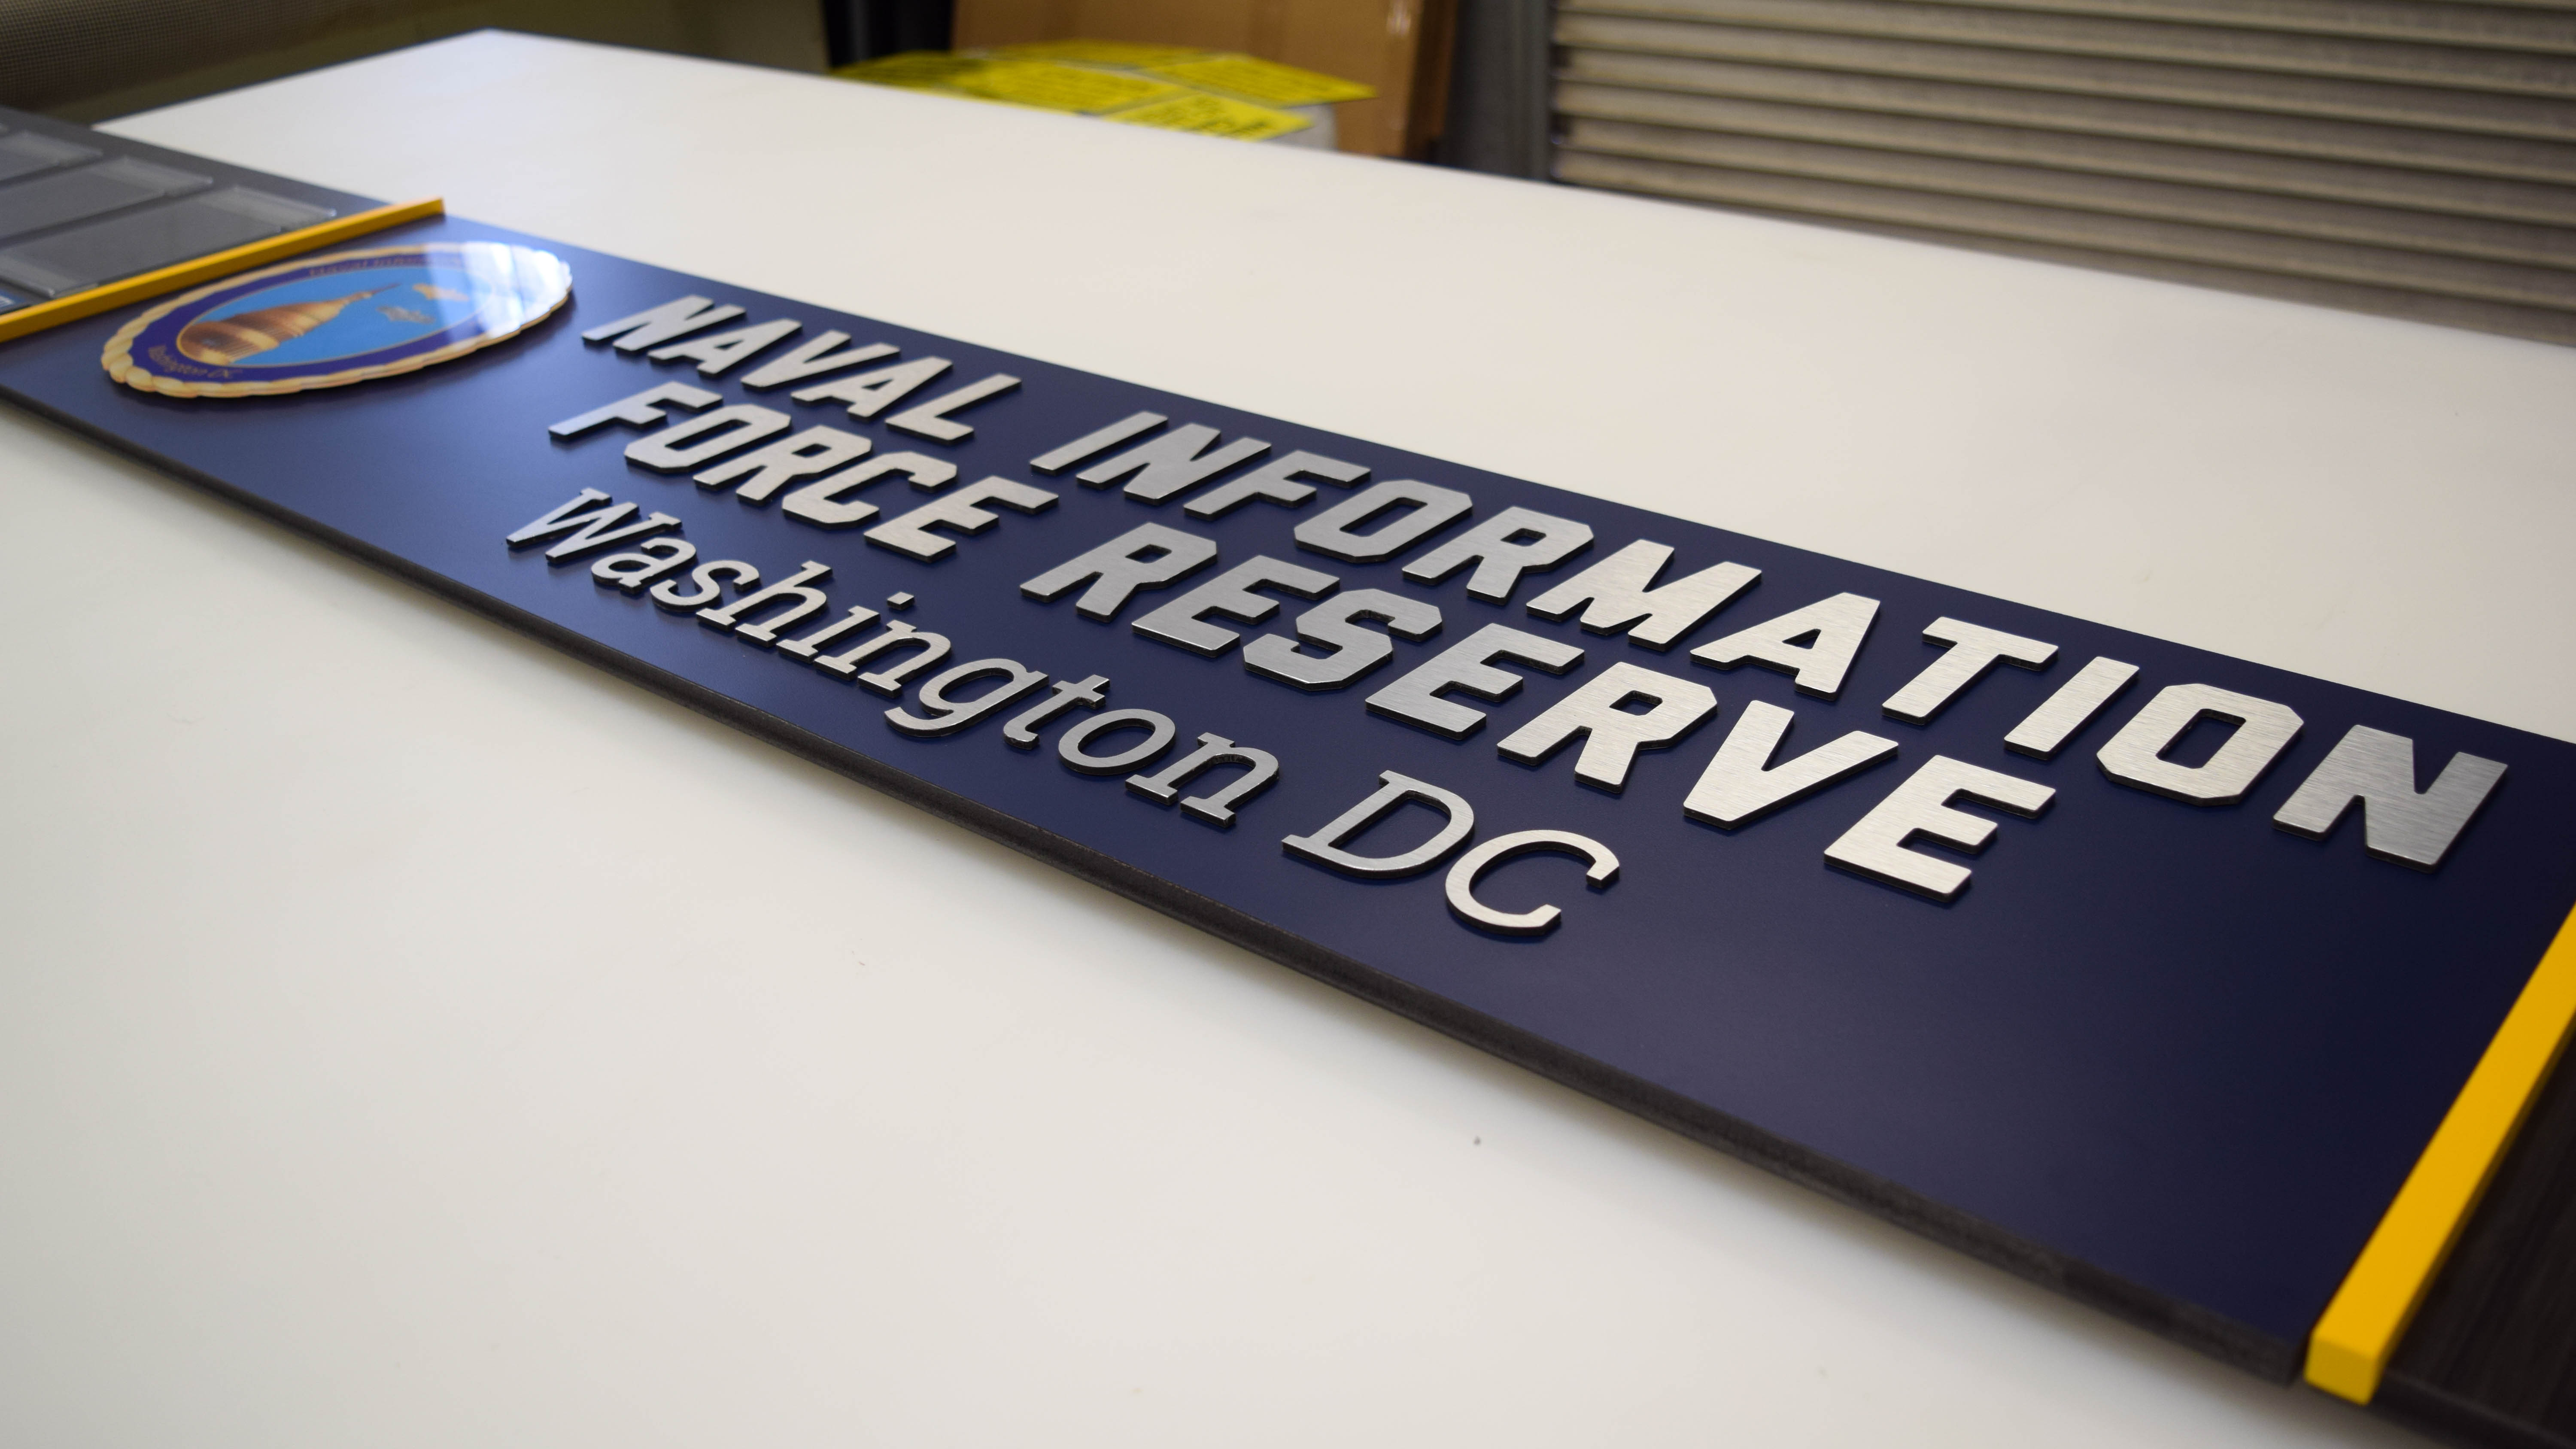 Recognition display header for Naval Information Force Reserve in Washington D.C.